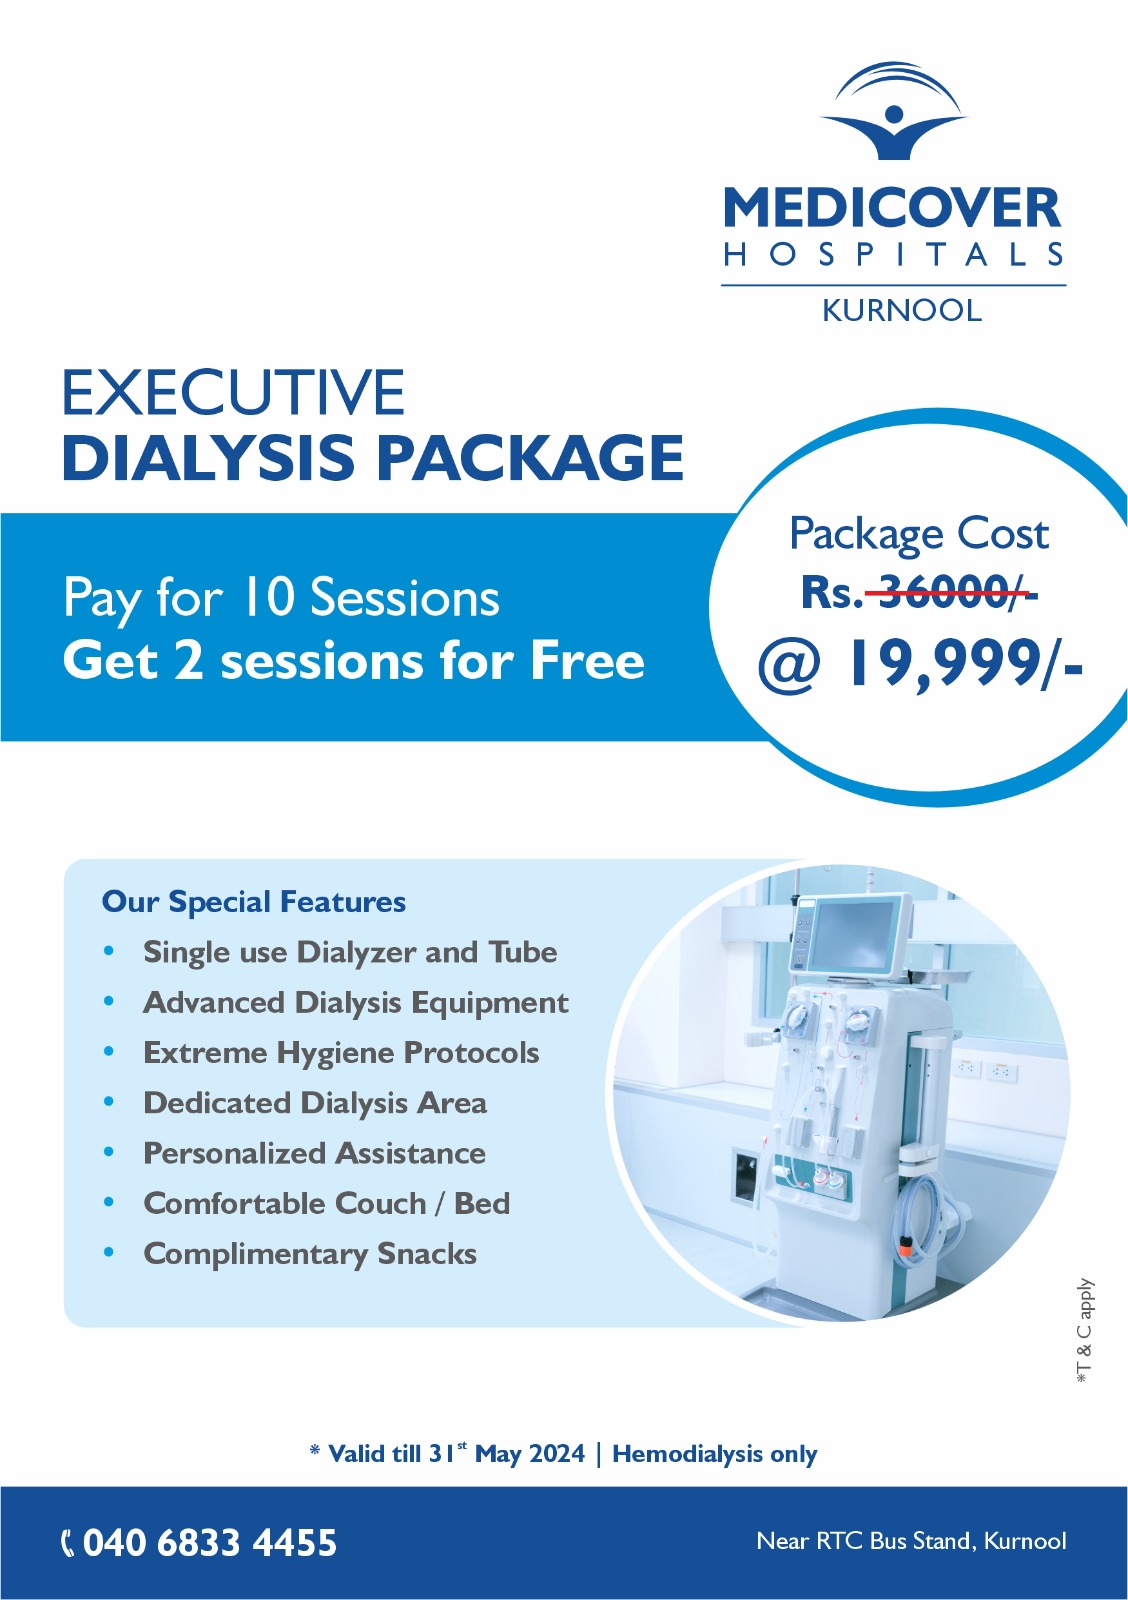 Exclusive Dialysis Package - Kurnool